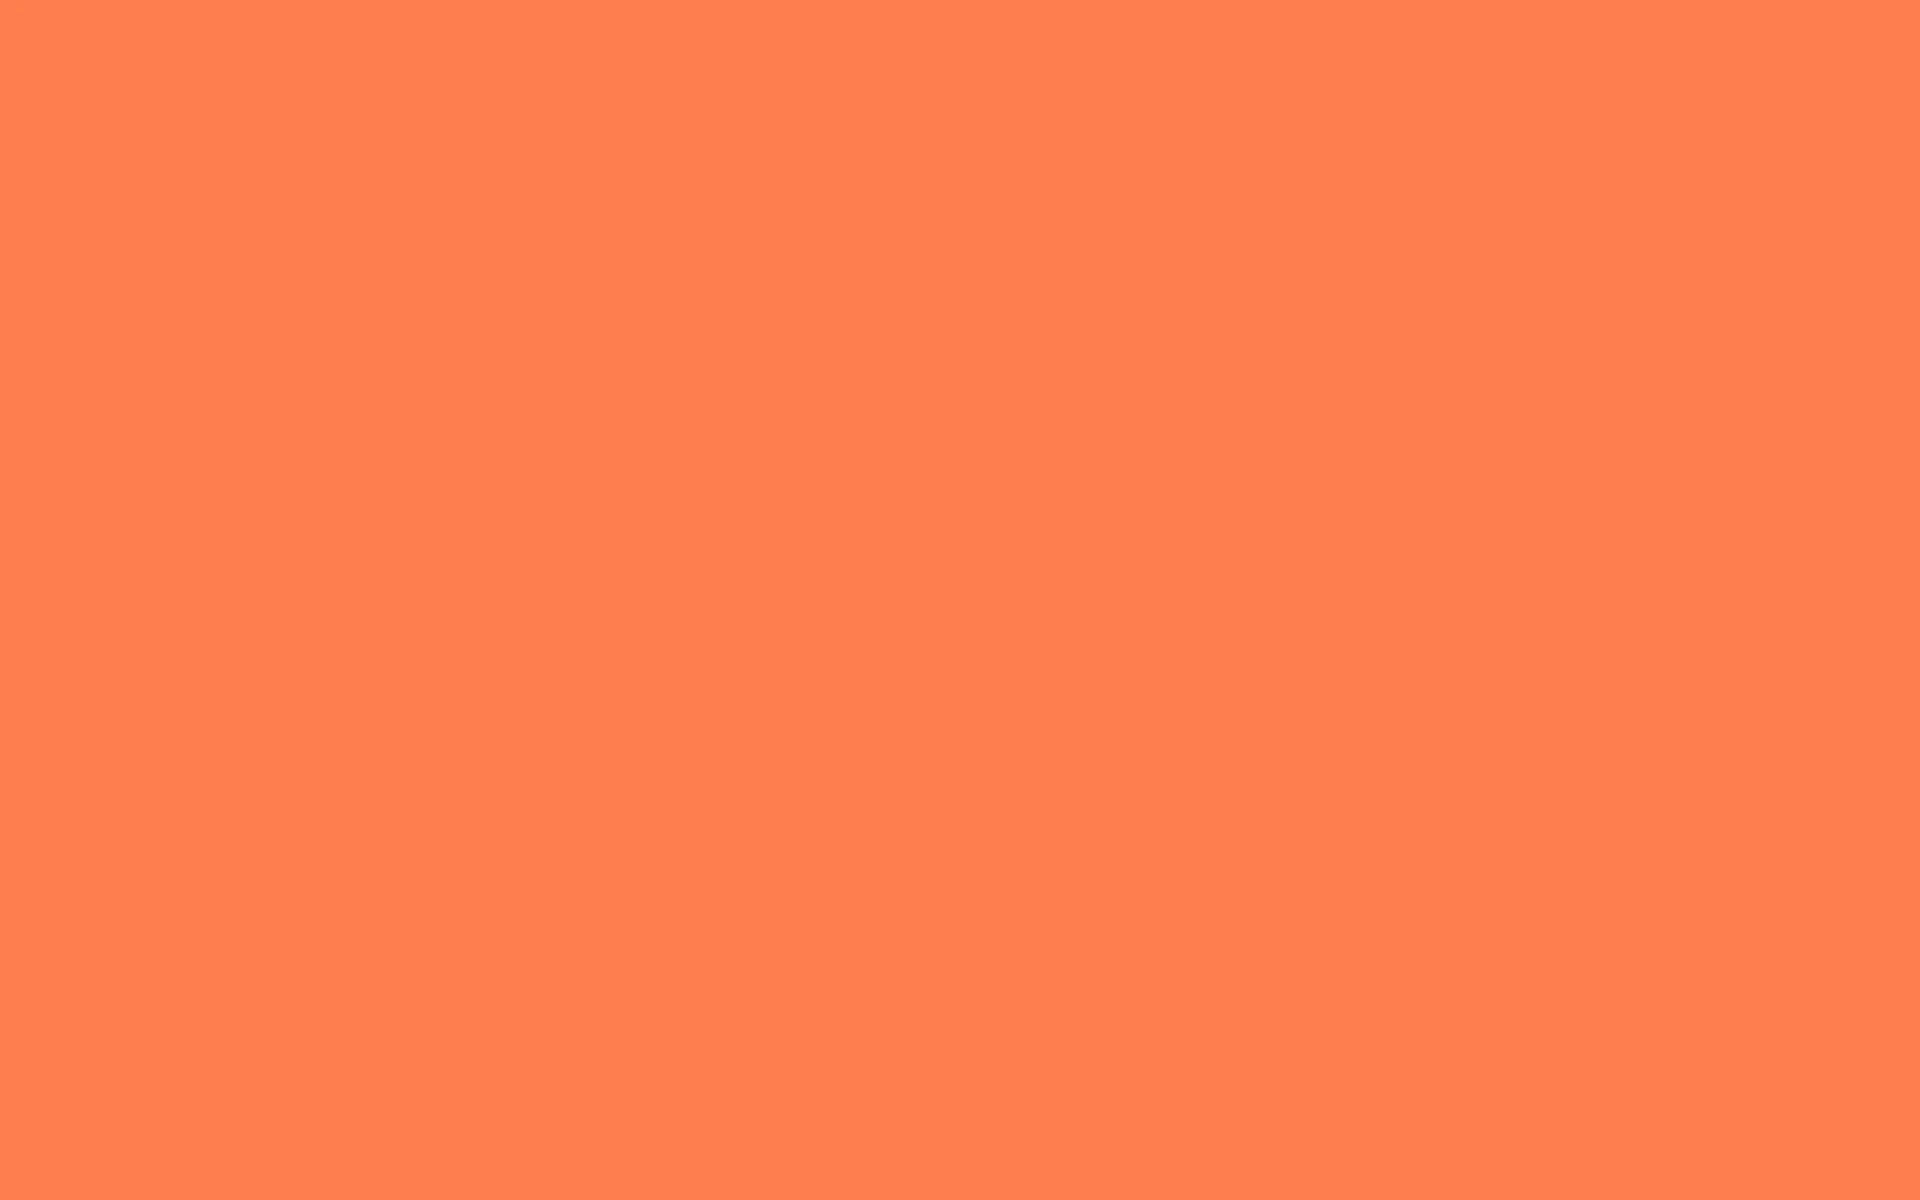 Solid Orange 2560 X 1600 Wallpaper